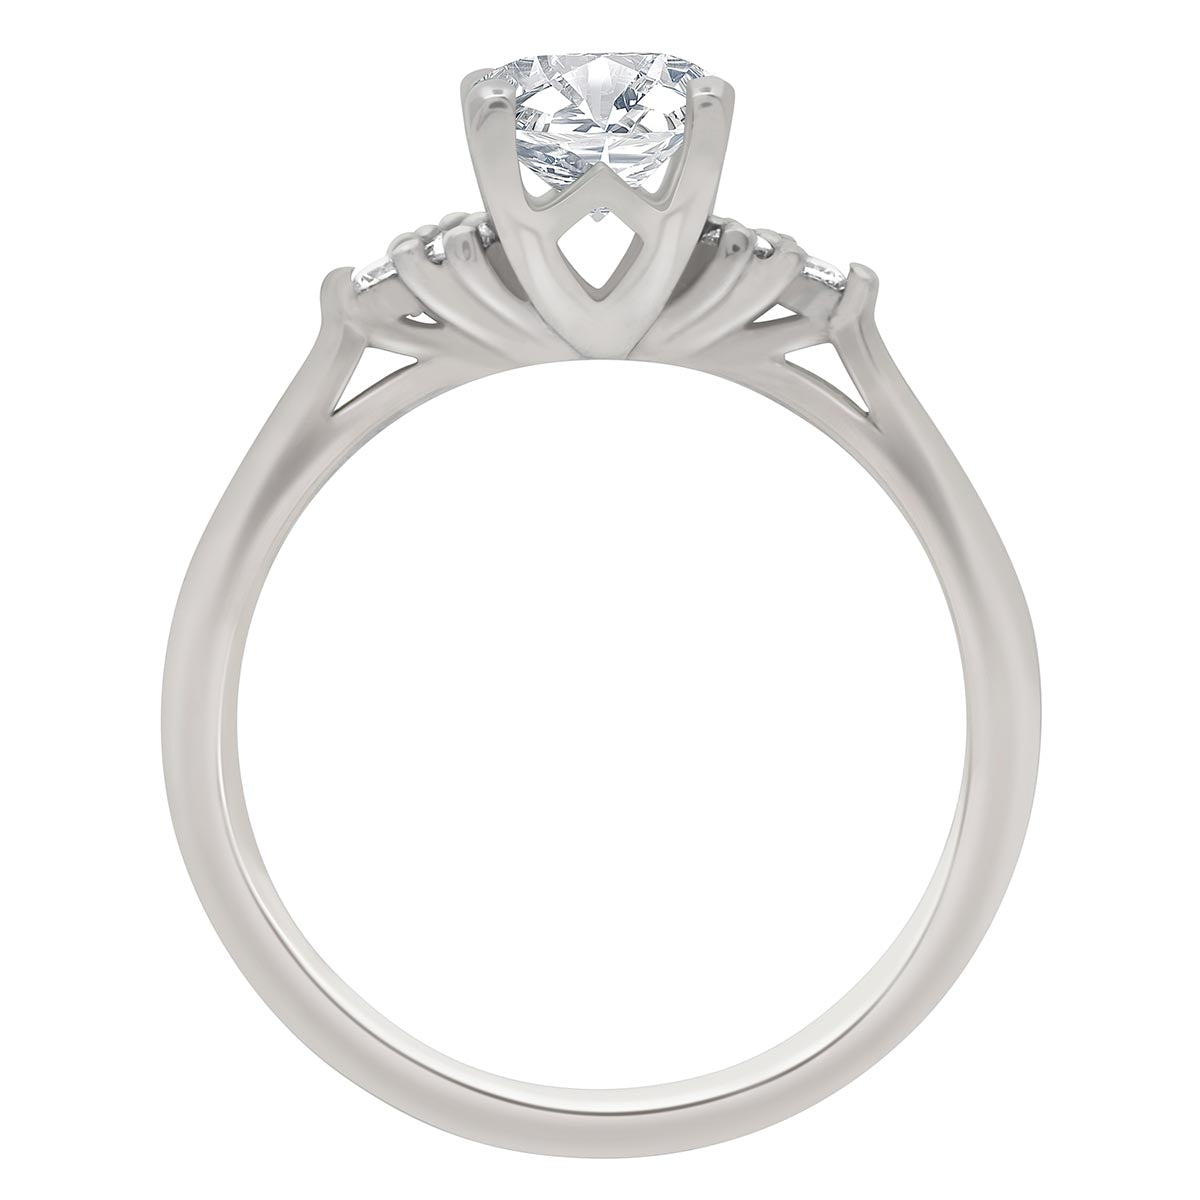 Handmade Engagement Ring in white gold standing vertical